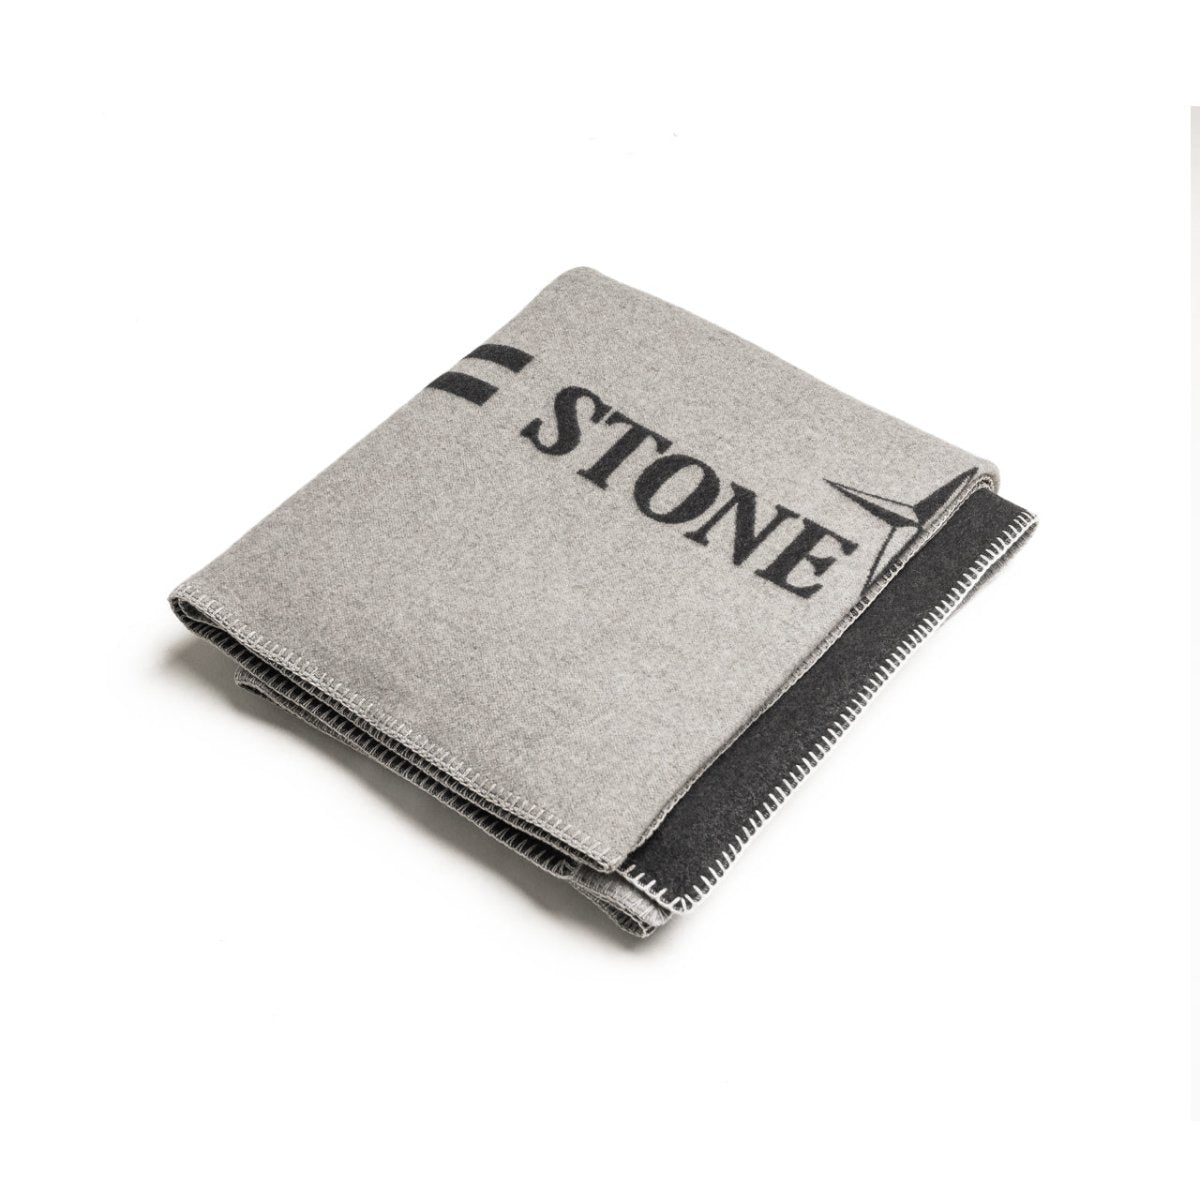 Stone Island Blanket (Grau / Schwarz)  - Allike Store